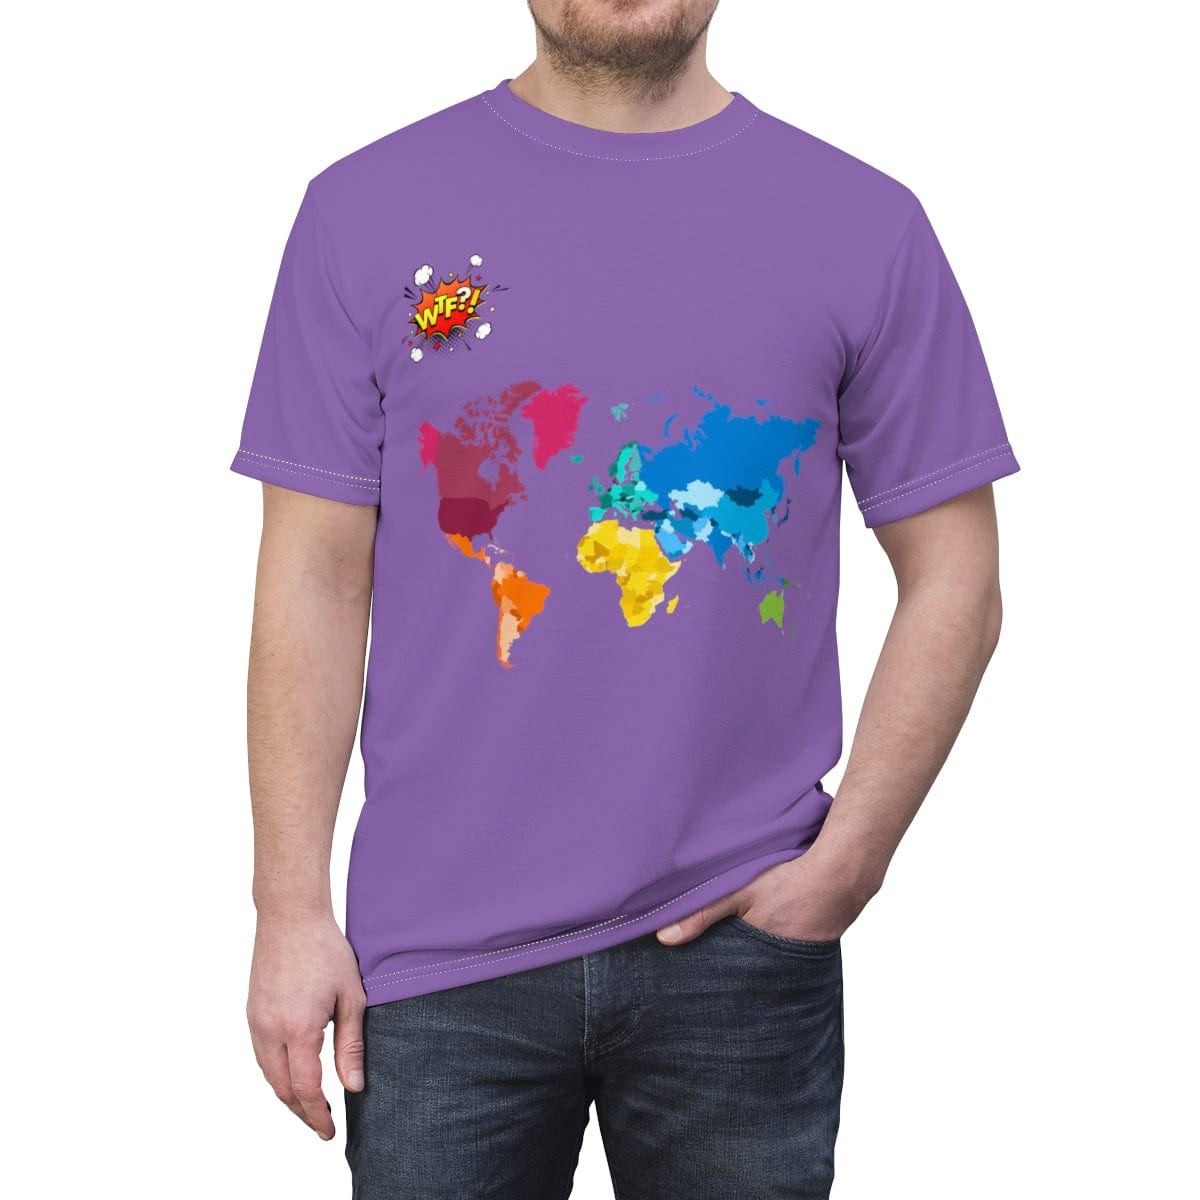 The All Premium Violet WTF! World Unisex Cut & Sew T-Shirt